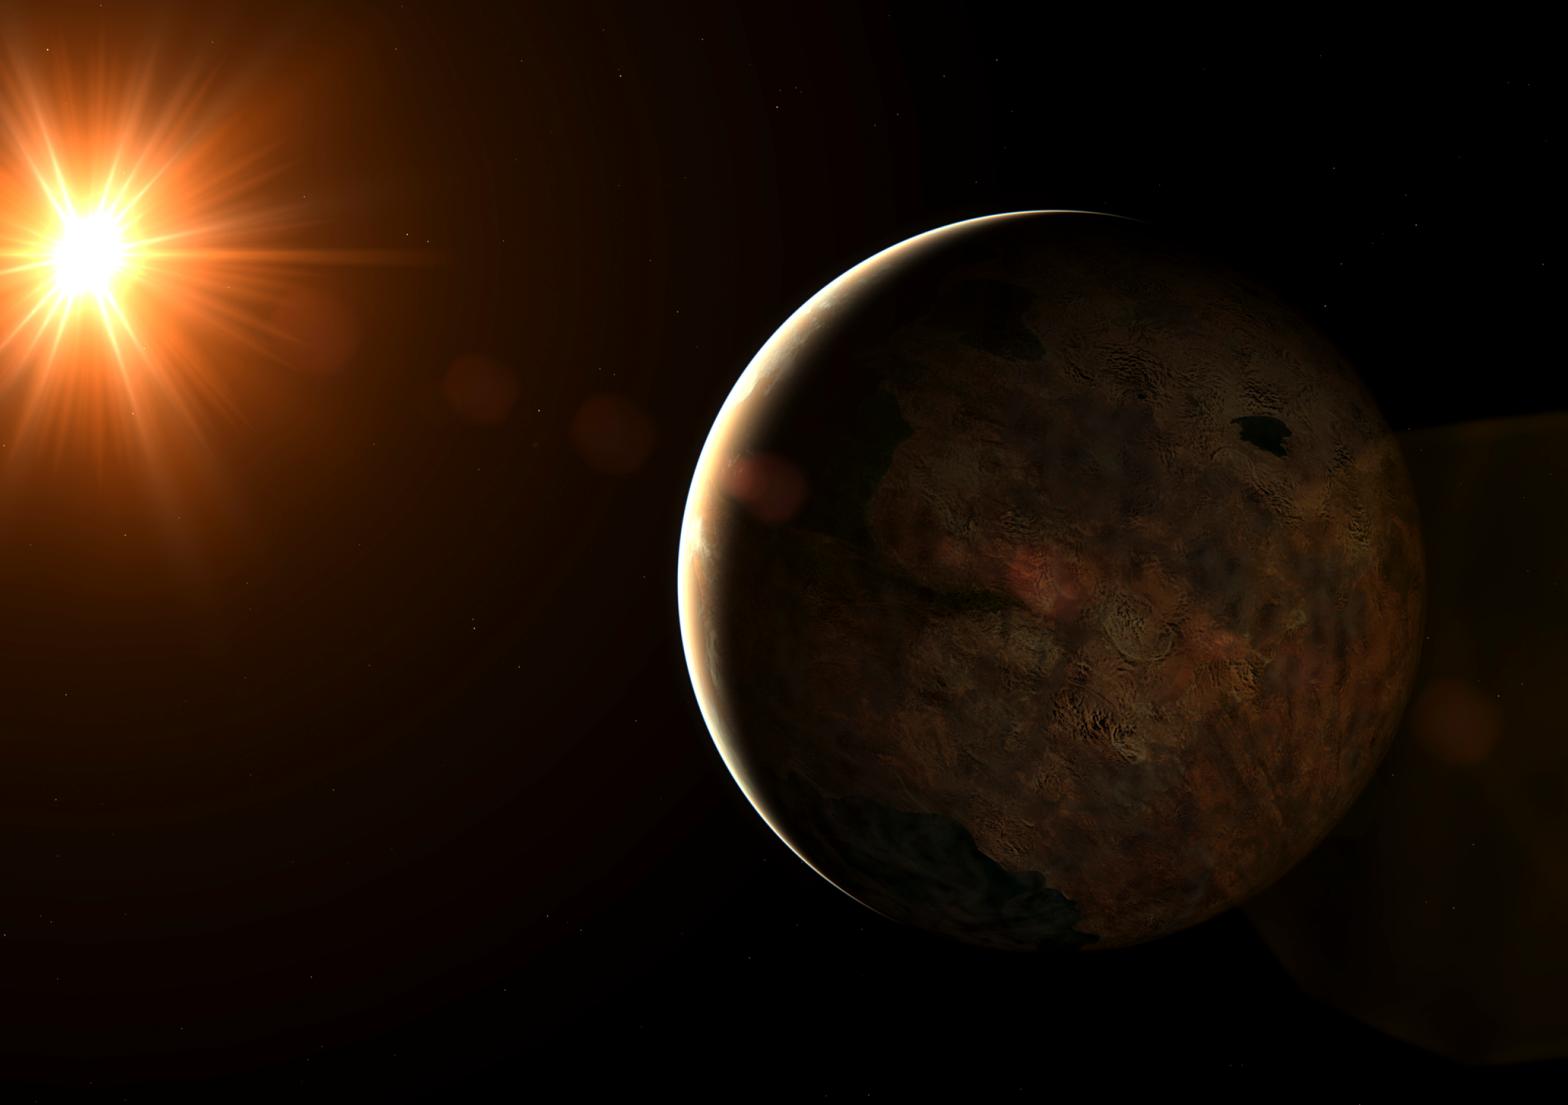 Super Earth exoplanet orbiting a red dwarf star.